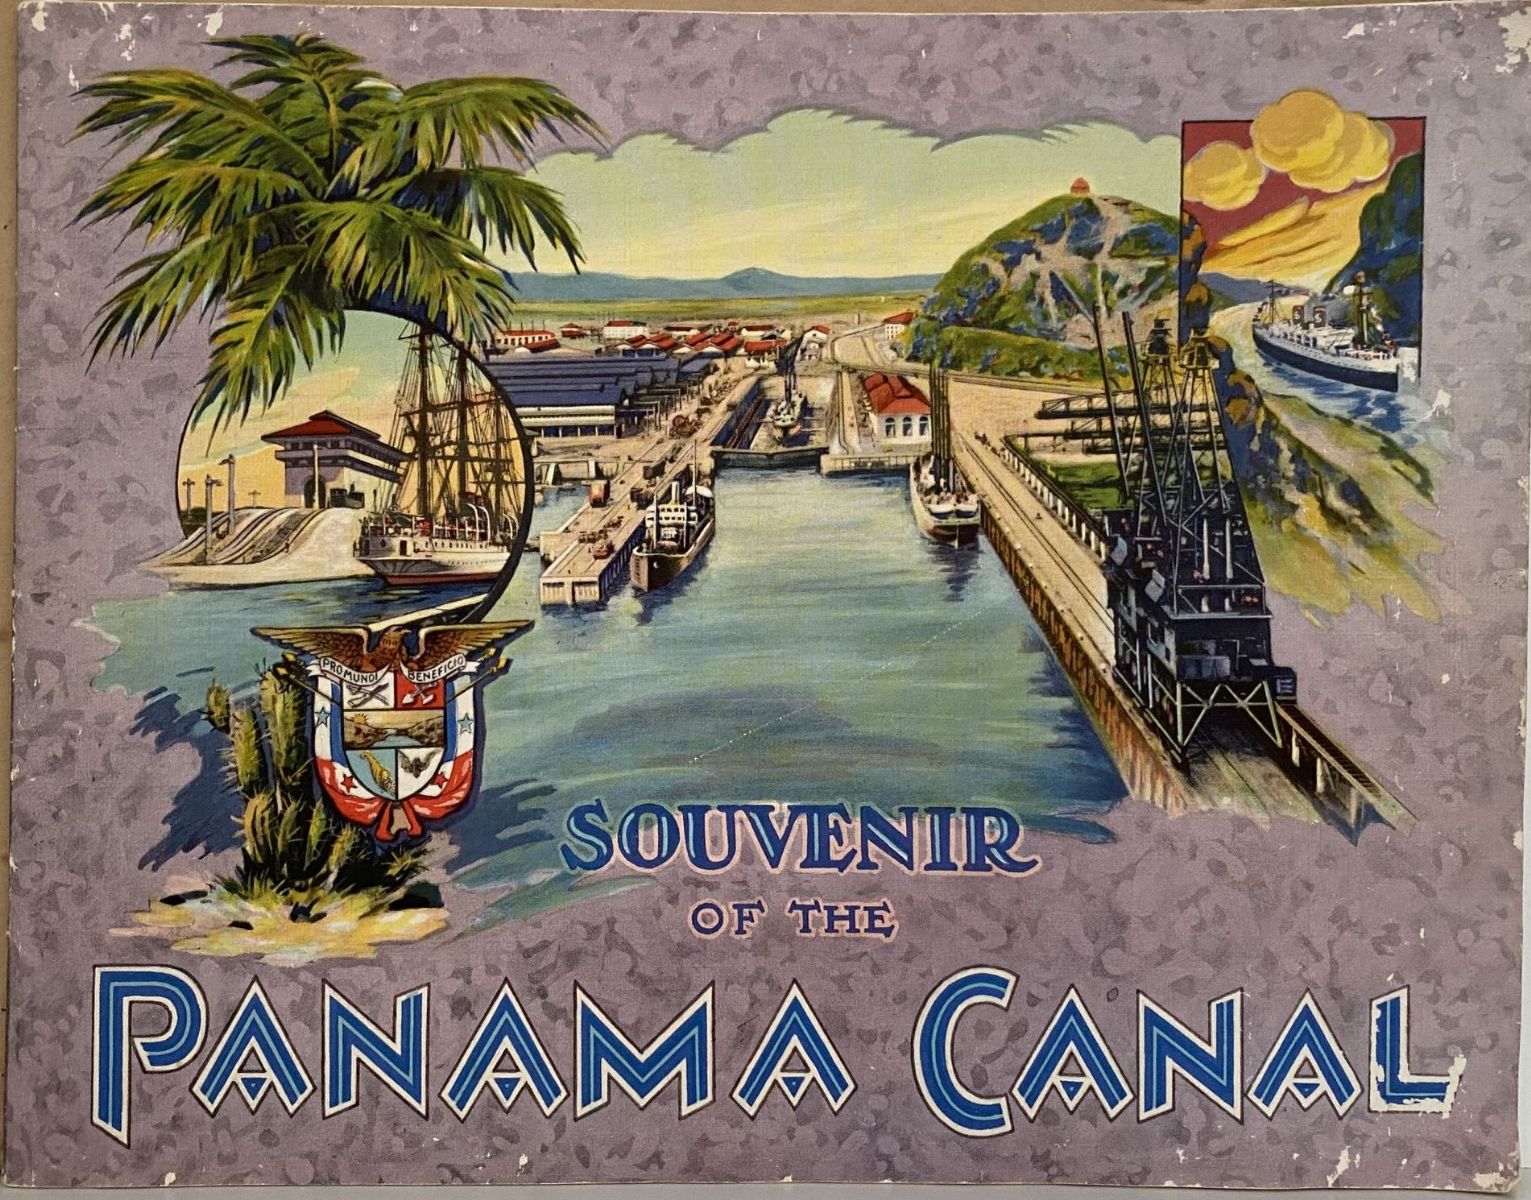 PANAMA CANAL: Souvenir